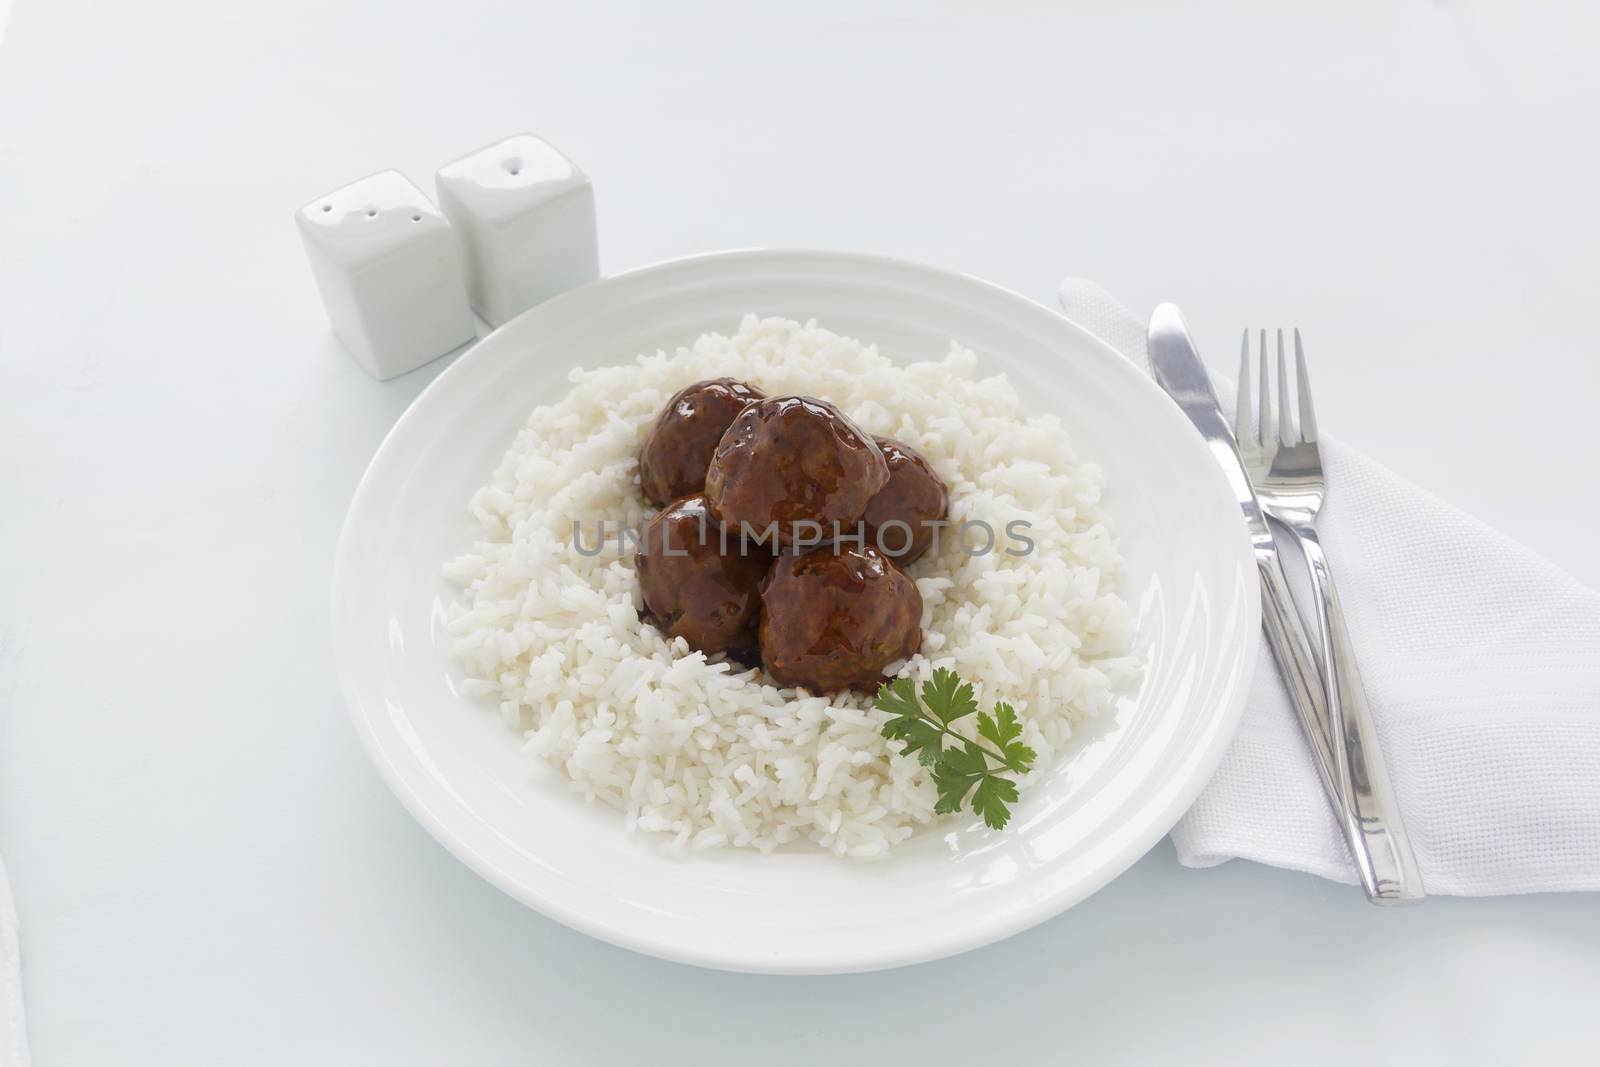 Meat Balls In Hoisin Sauce by jabiru